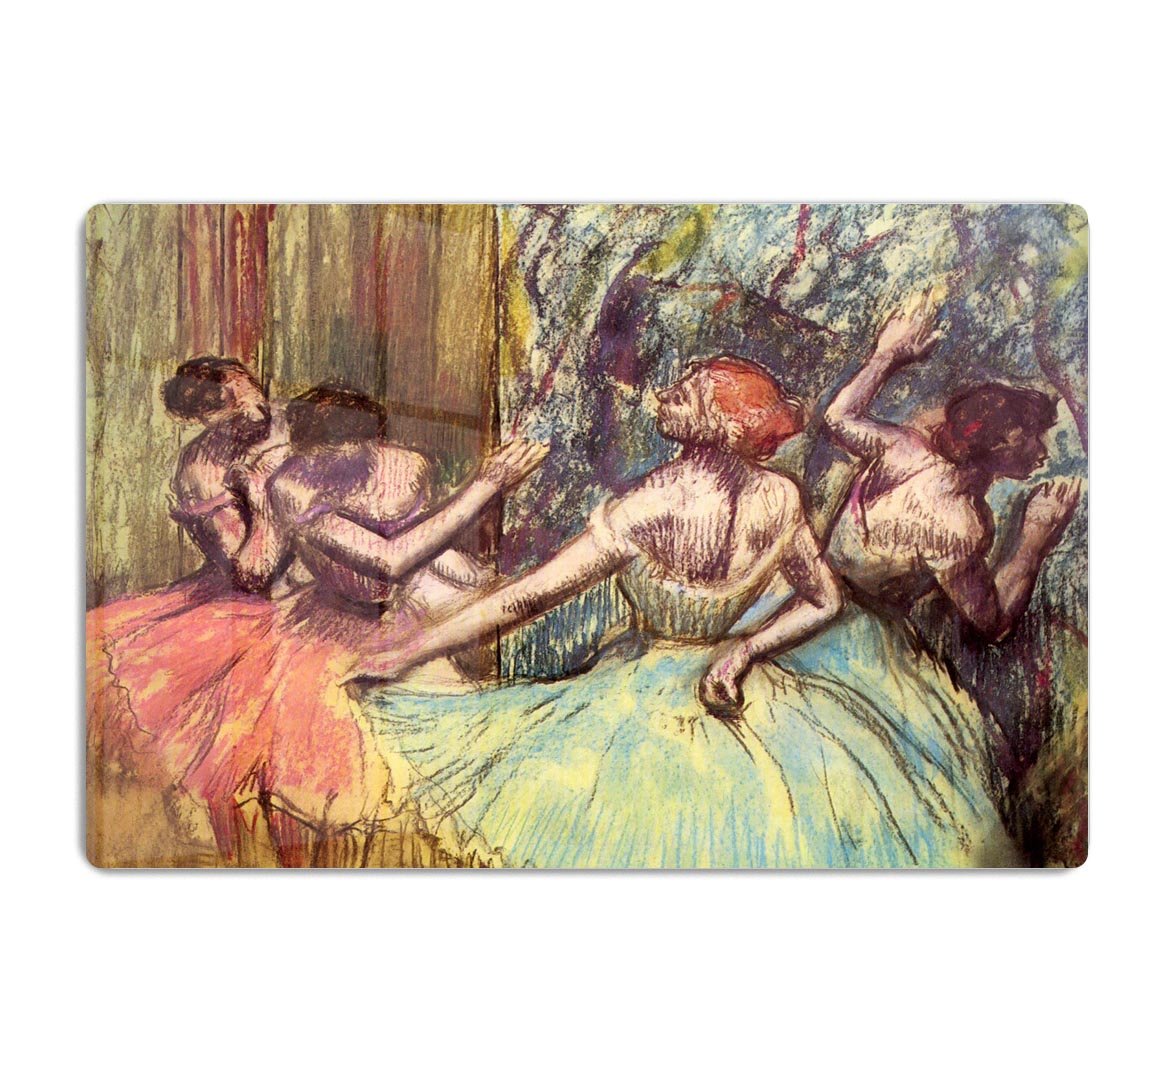 Four dancers behind the scenes 2 by Degas HD Metal Print - Canvas Art Rocks - 1